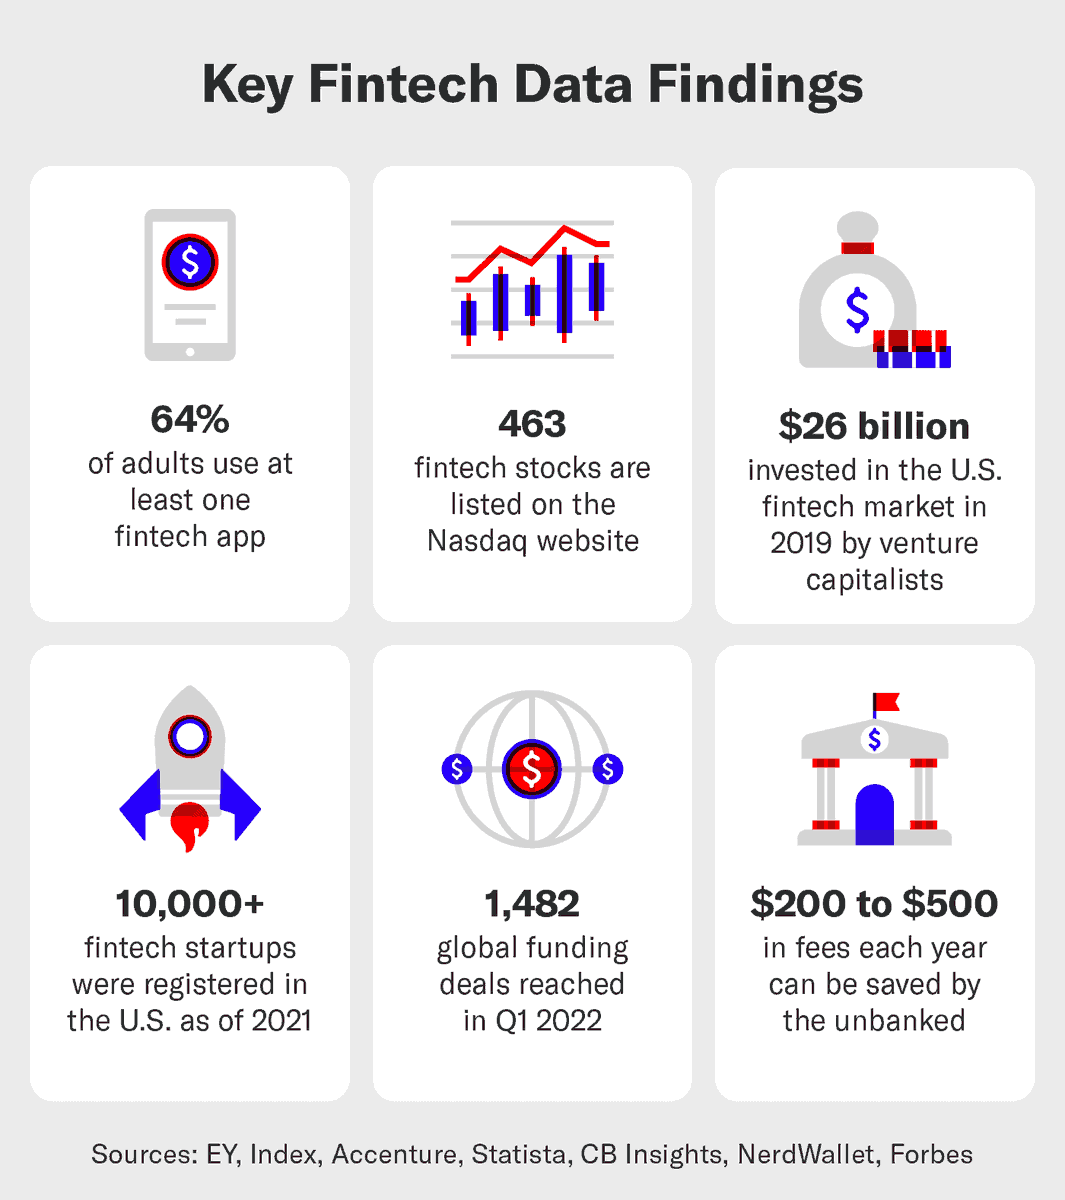 #Infographic: Key fintech data findings!

#AI #GenerativeAI #AITransformation #disruption #Finance #Accounting #Fintech #DataPrivacy #DataSecurity 

cc: @sonu_monika @enilev @mvollmer1 @EstelaMandela @Nicochan33